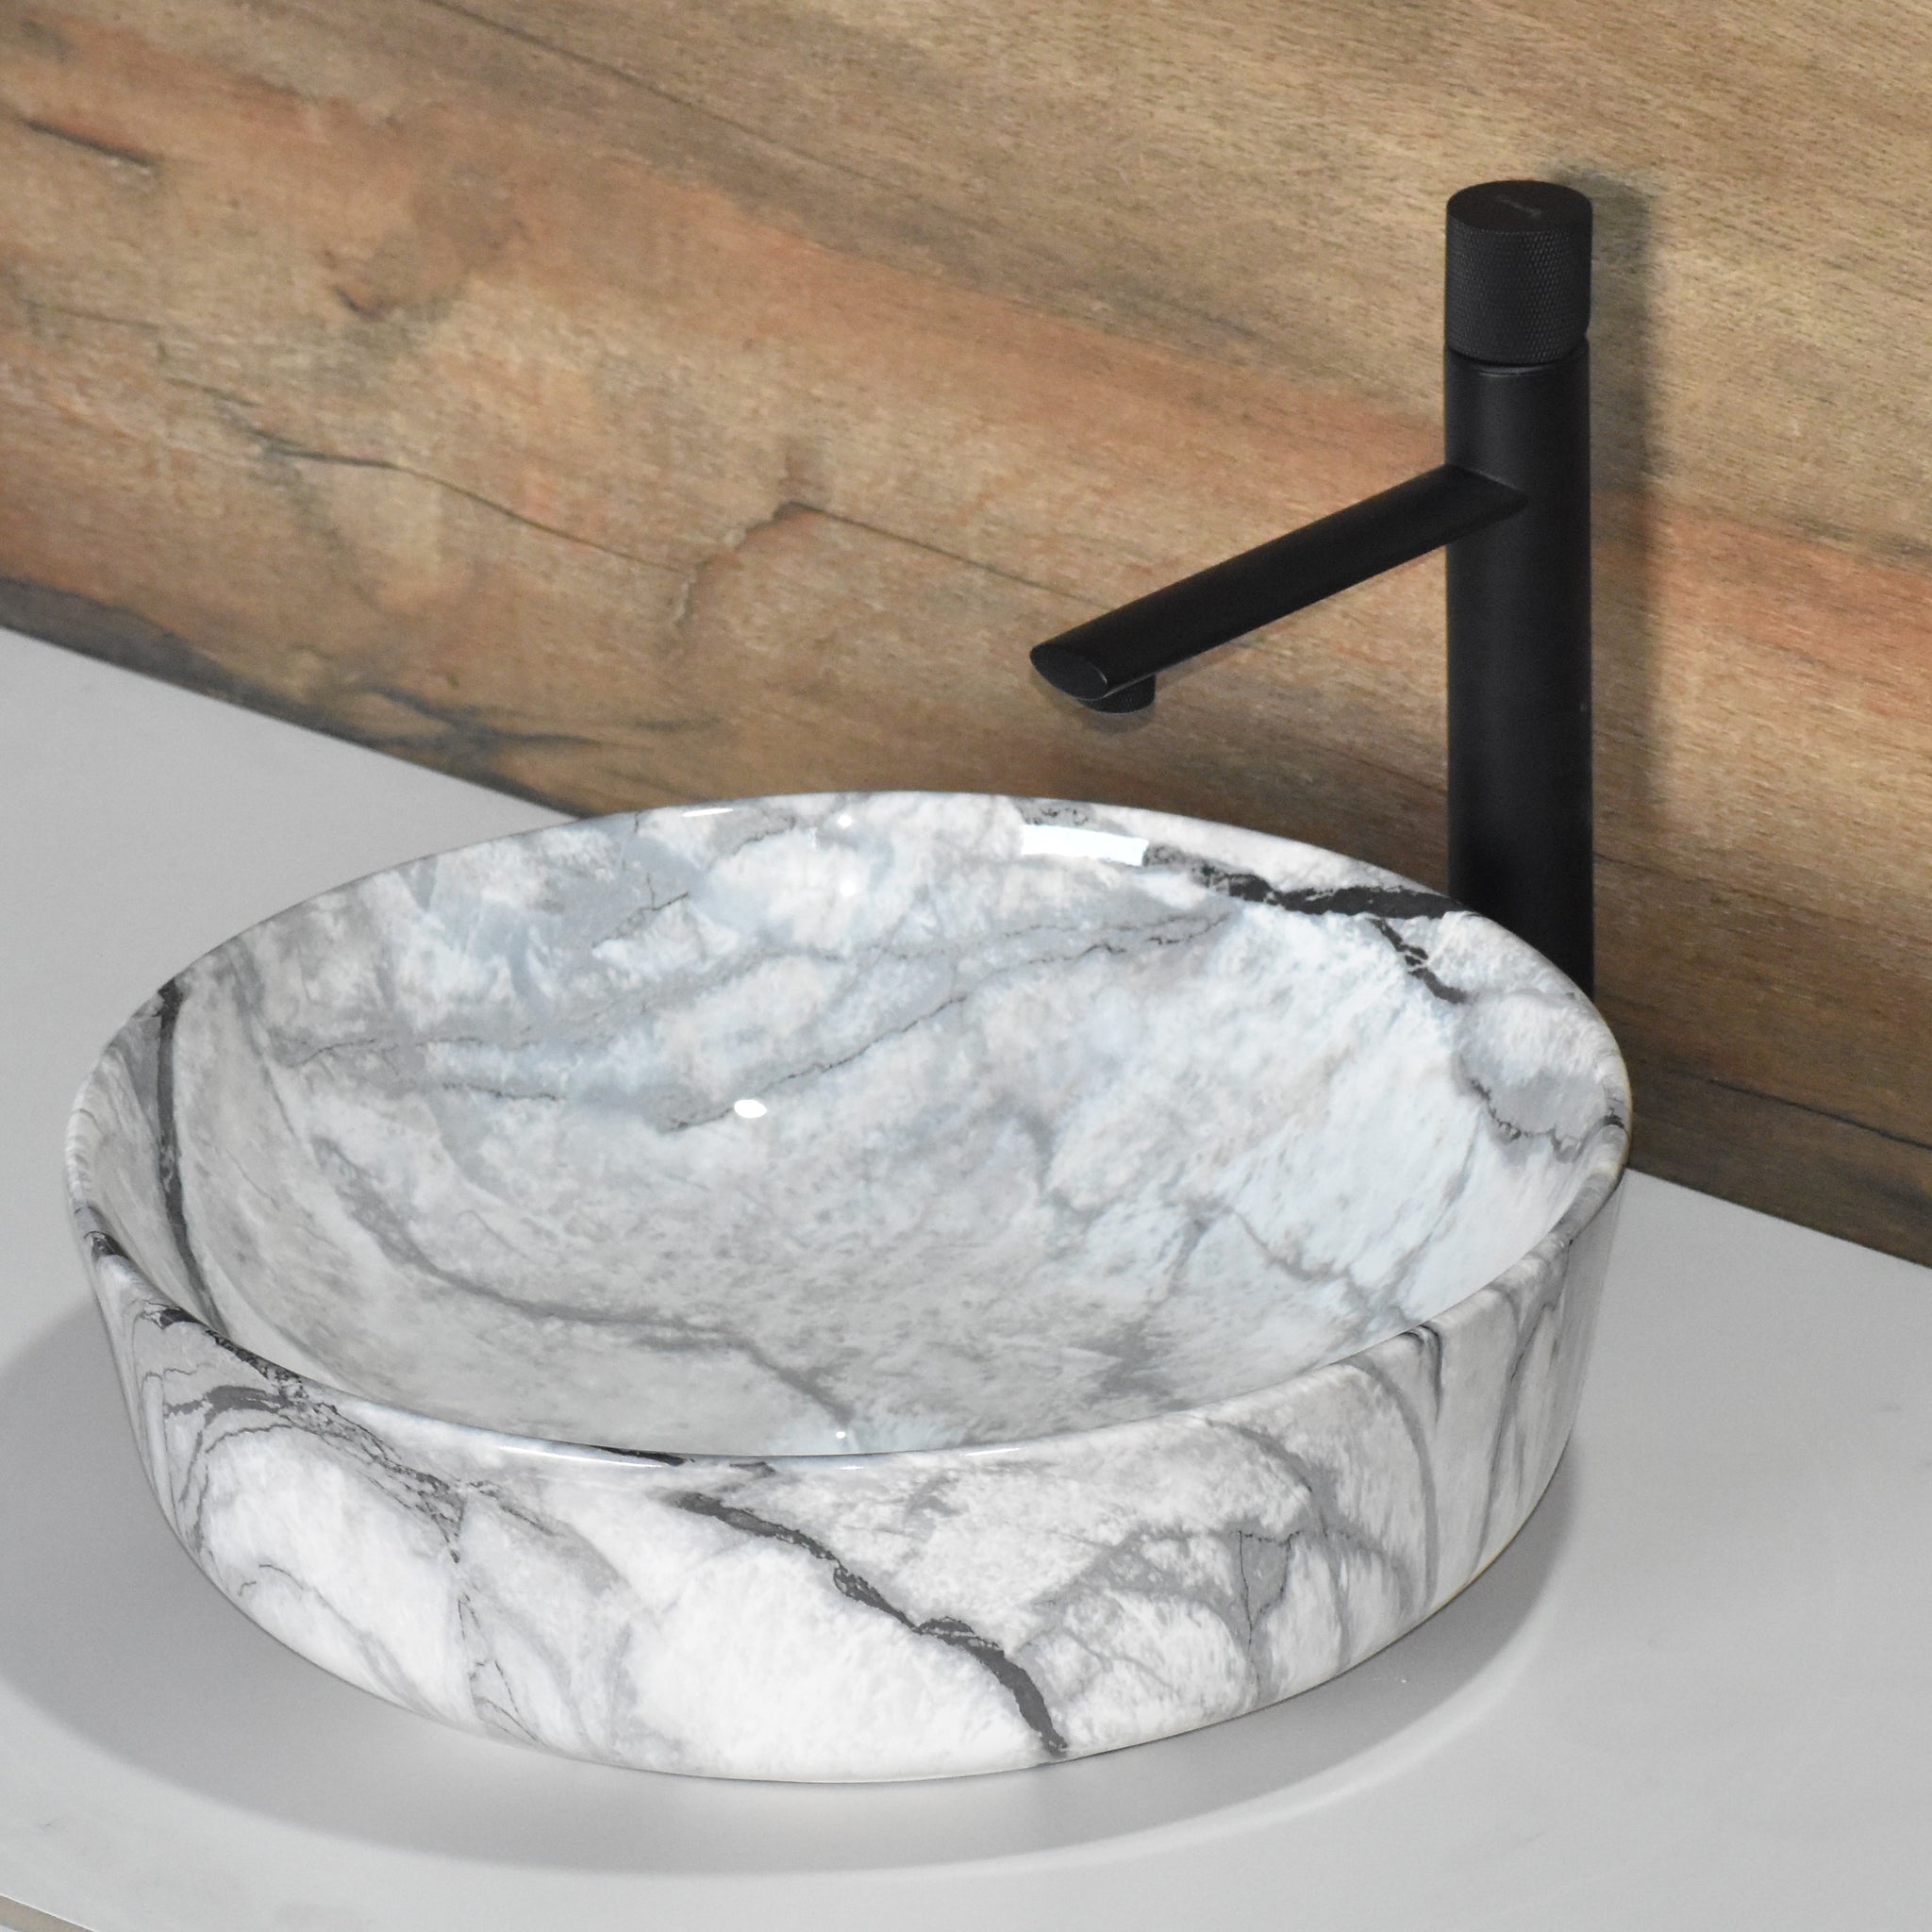 B Backline Ceramic Table Top, Counter Top Wash Basin 16 x 16 Inch Grey